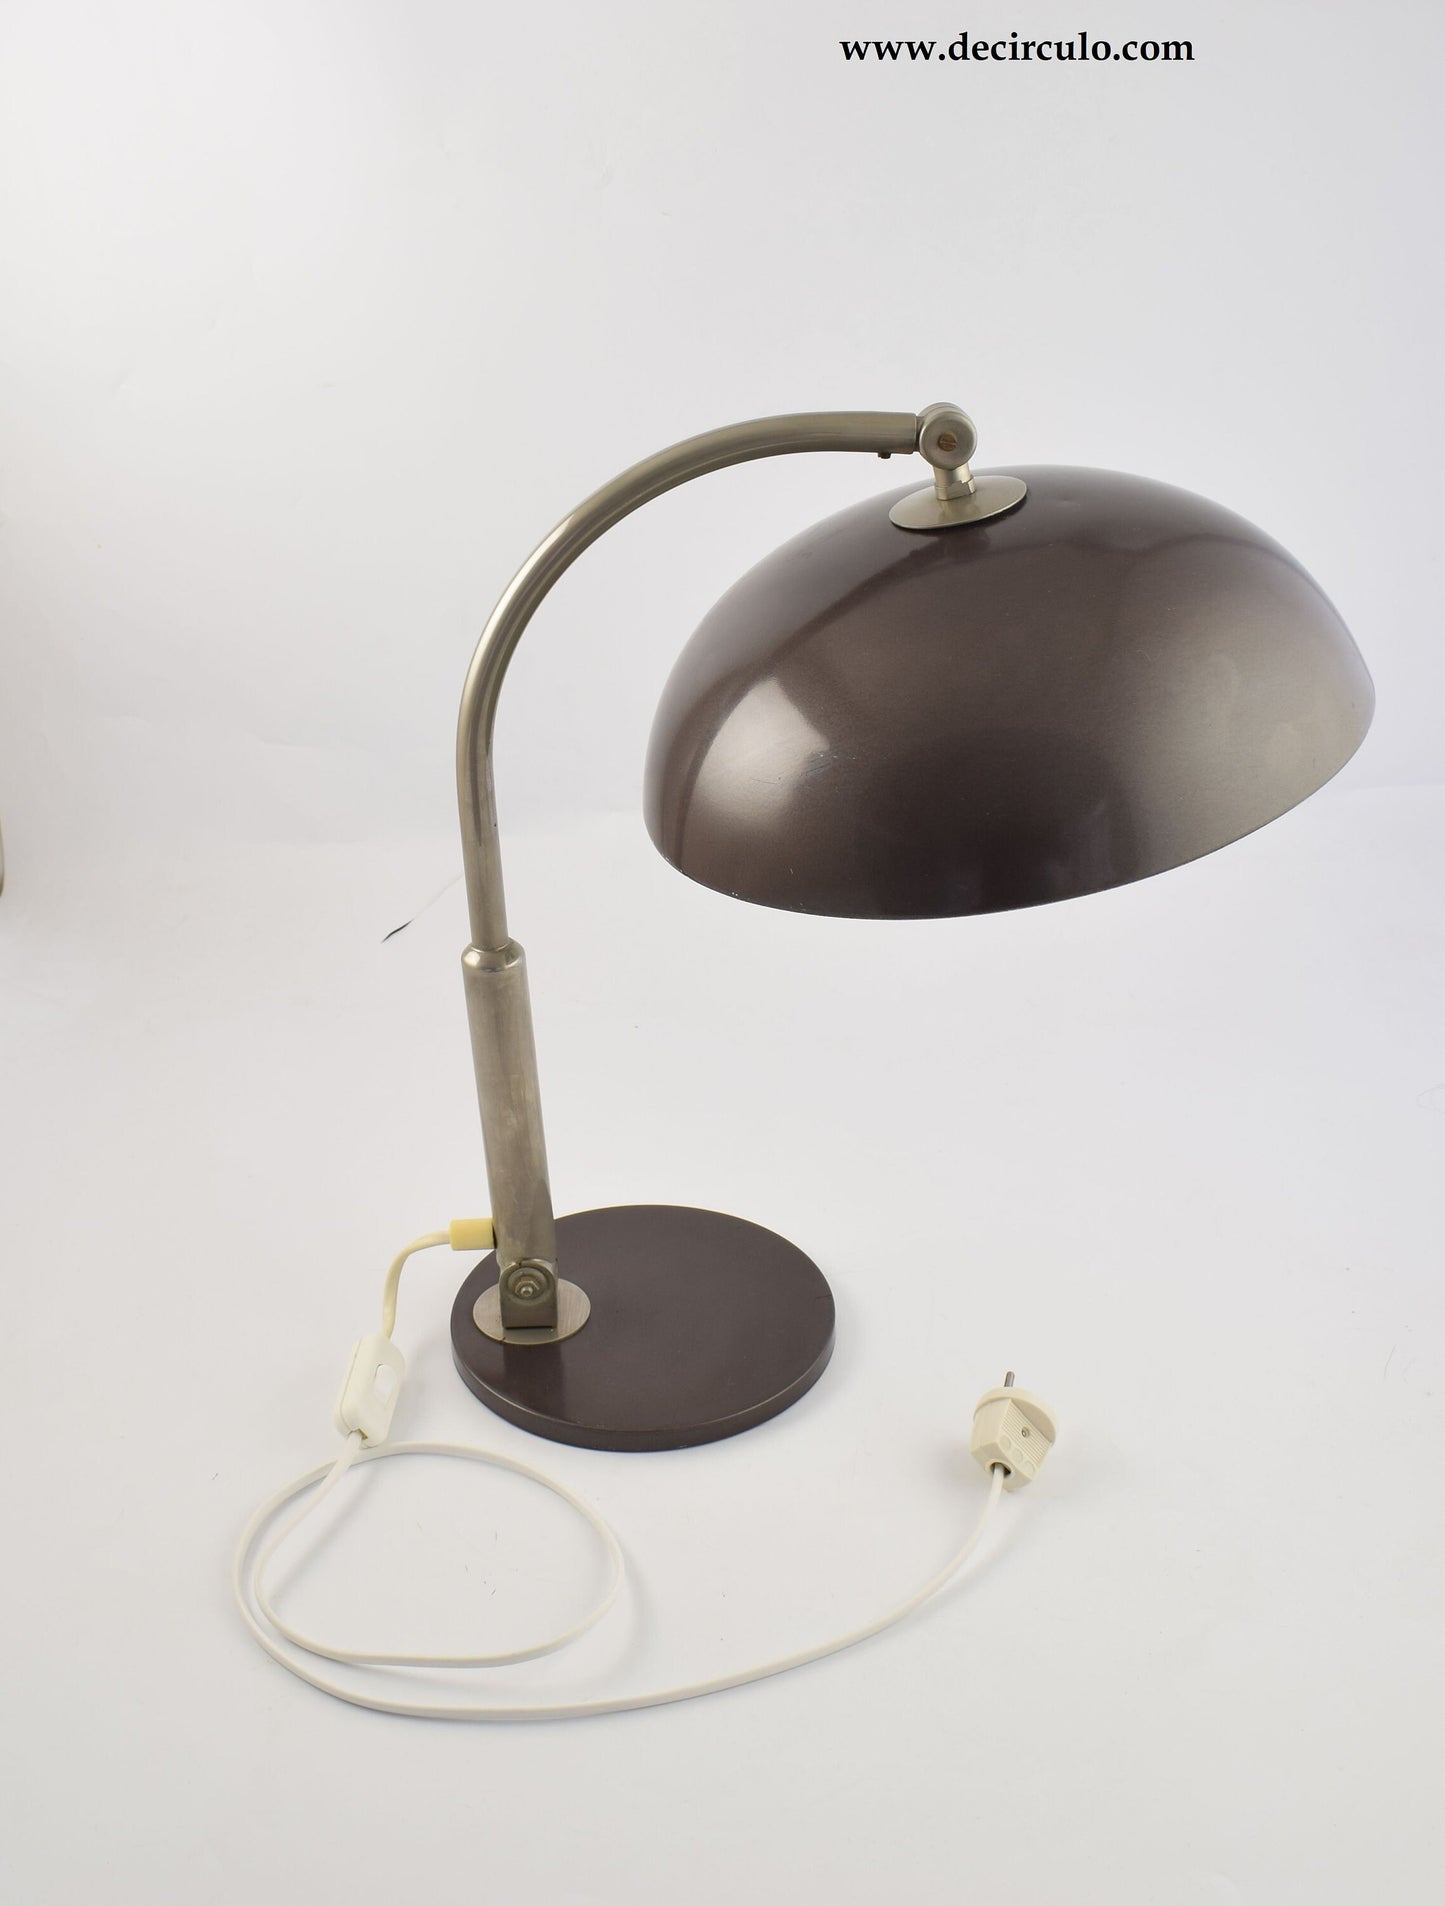 Hala Bureaulamp Model 144 ontworpen Busquet, bekende donker grijsbruin en chroom design tafellamp uit Nederland